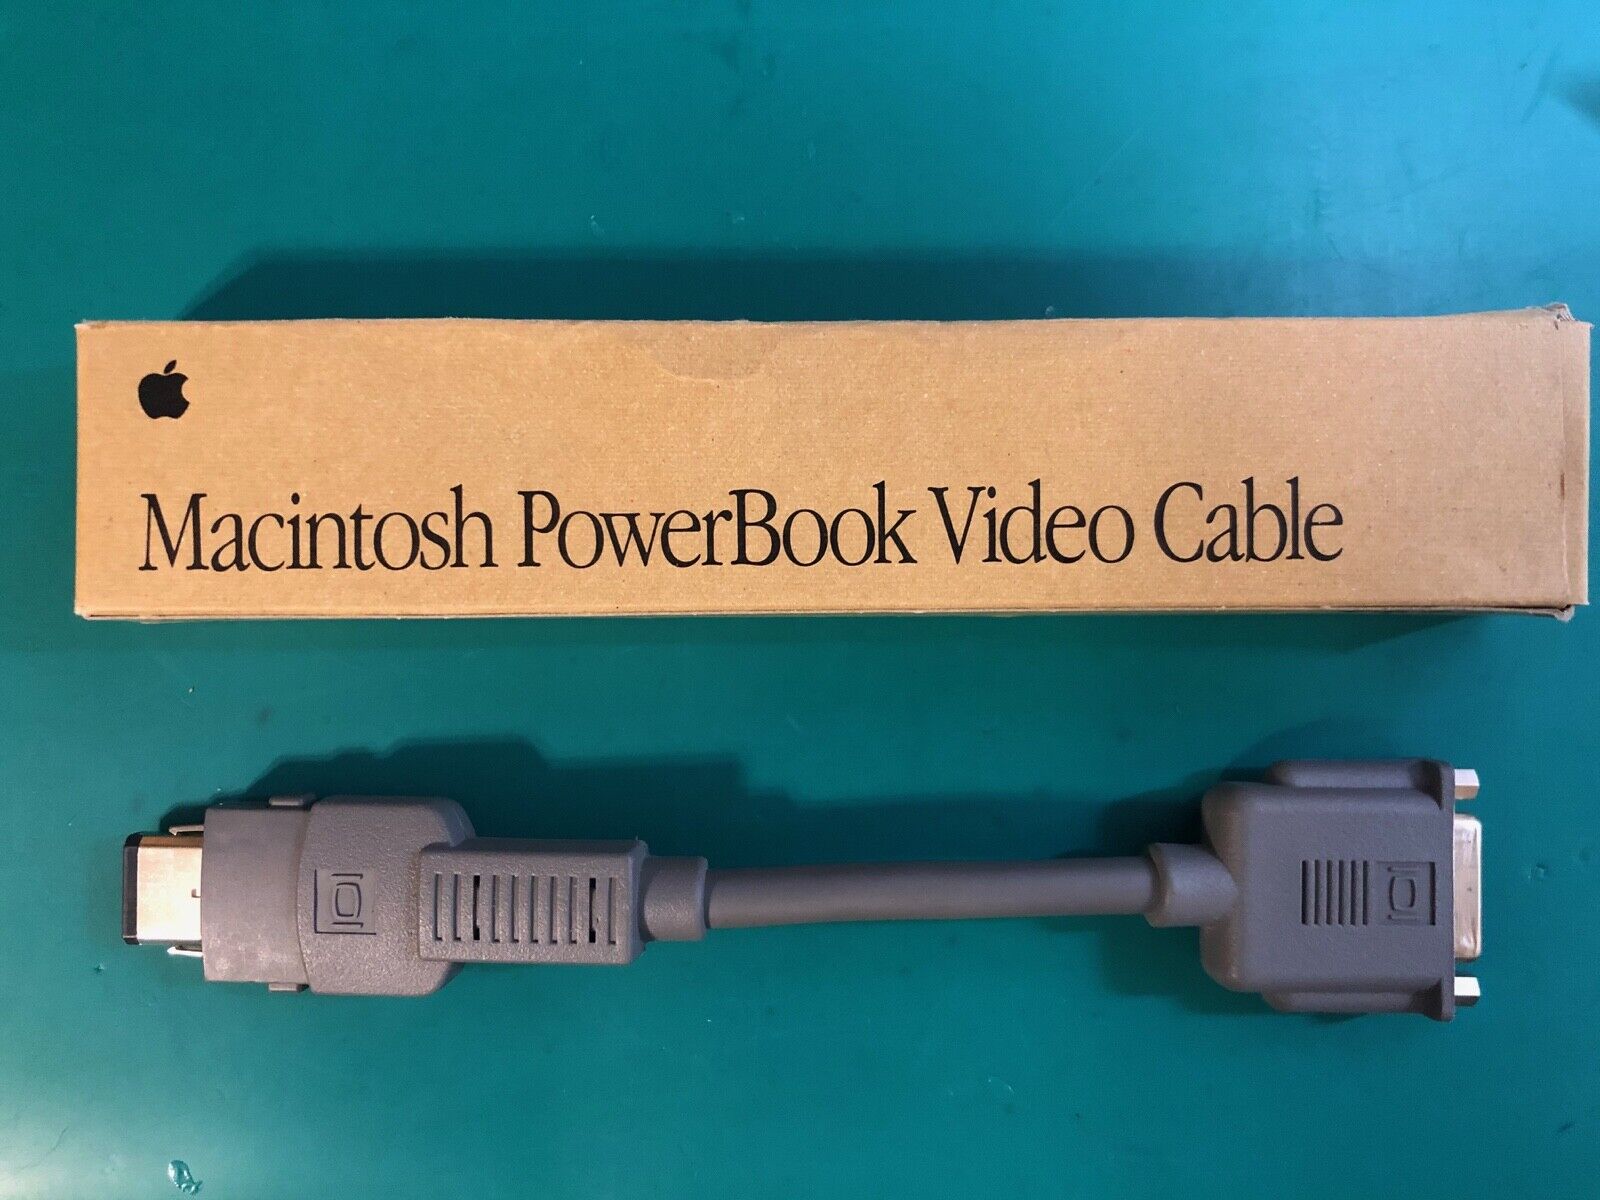 Macintosh PowerBook Video Cable in Box eBay